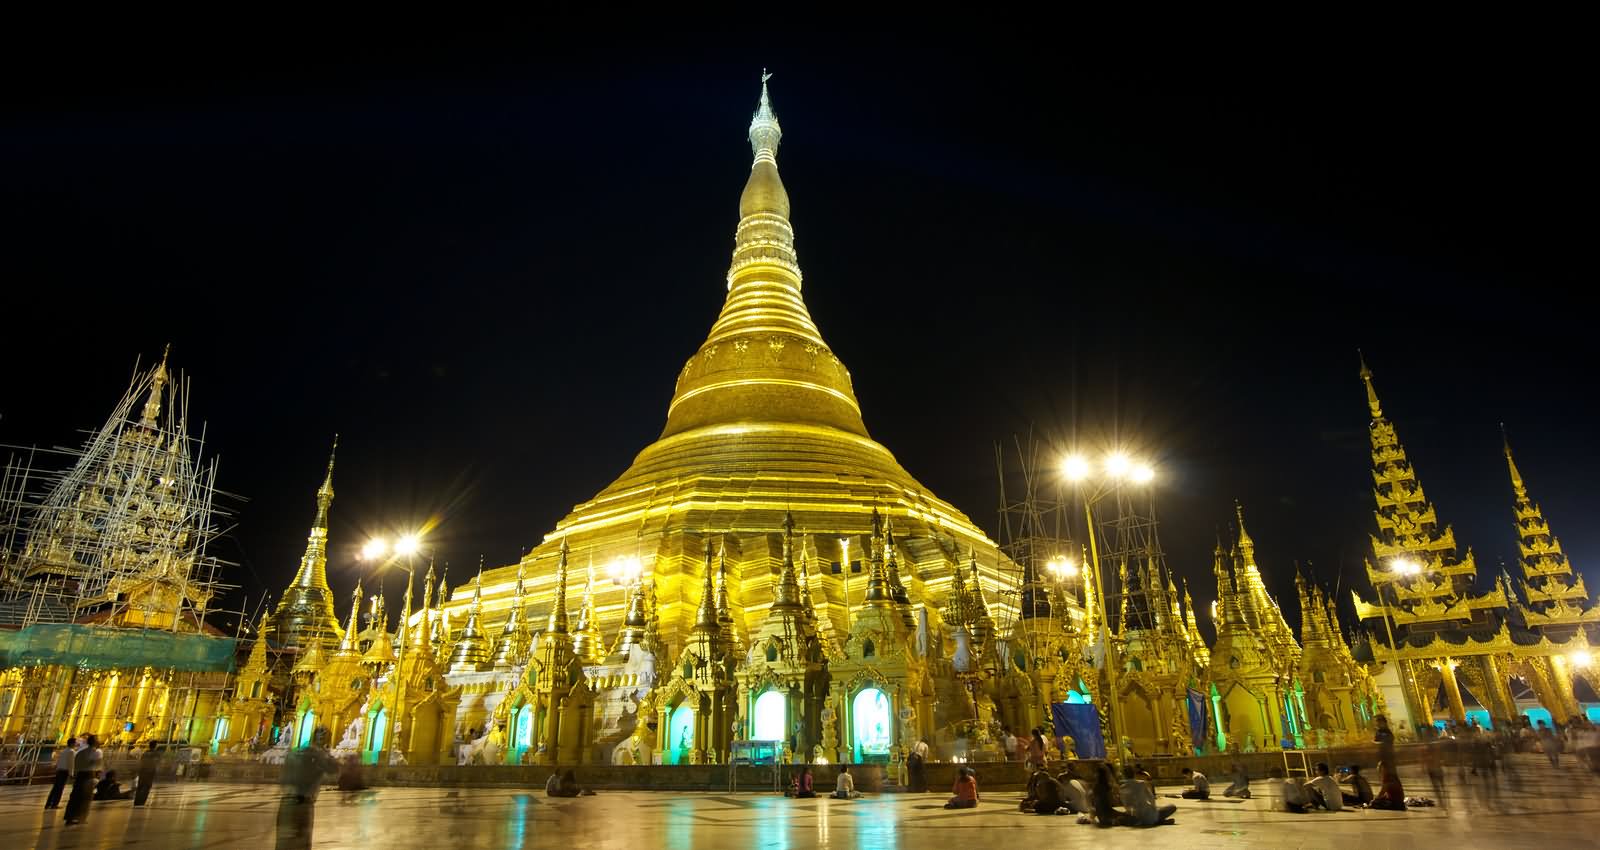 Incredible Night Picture Of The Shwedagon Pagoda